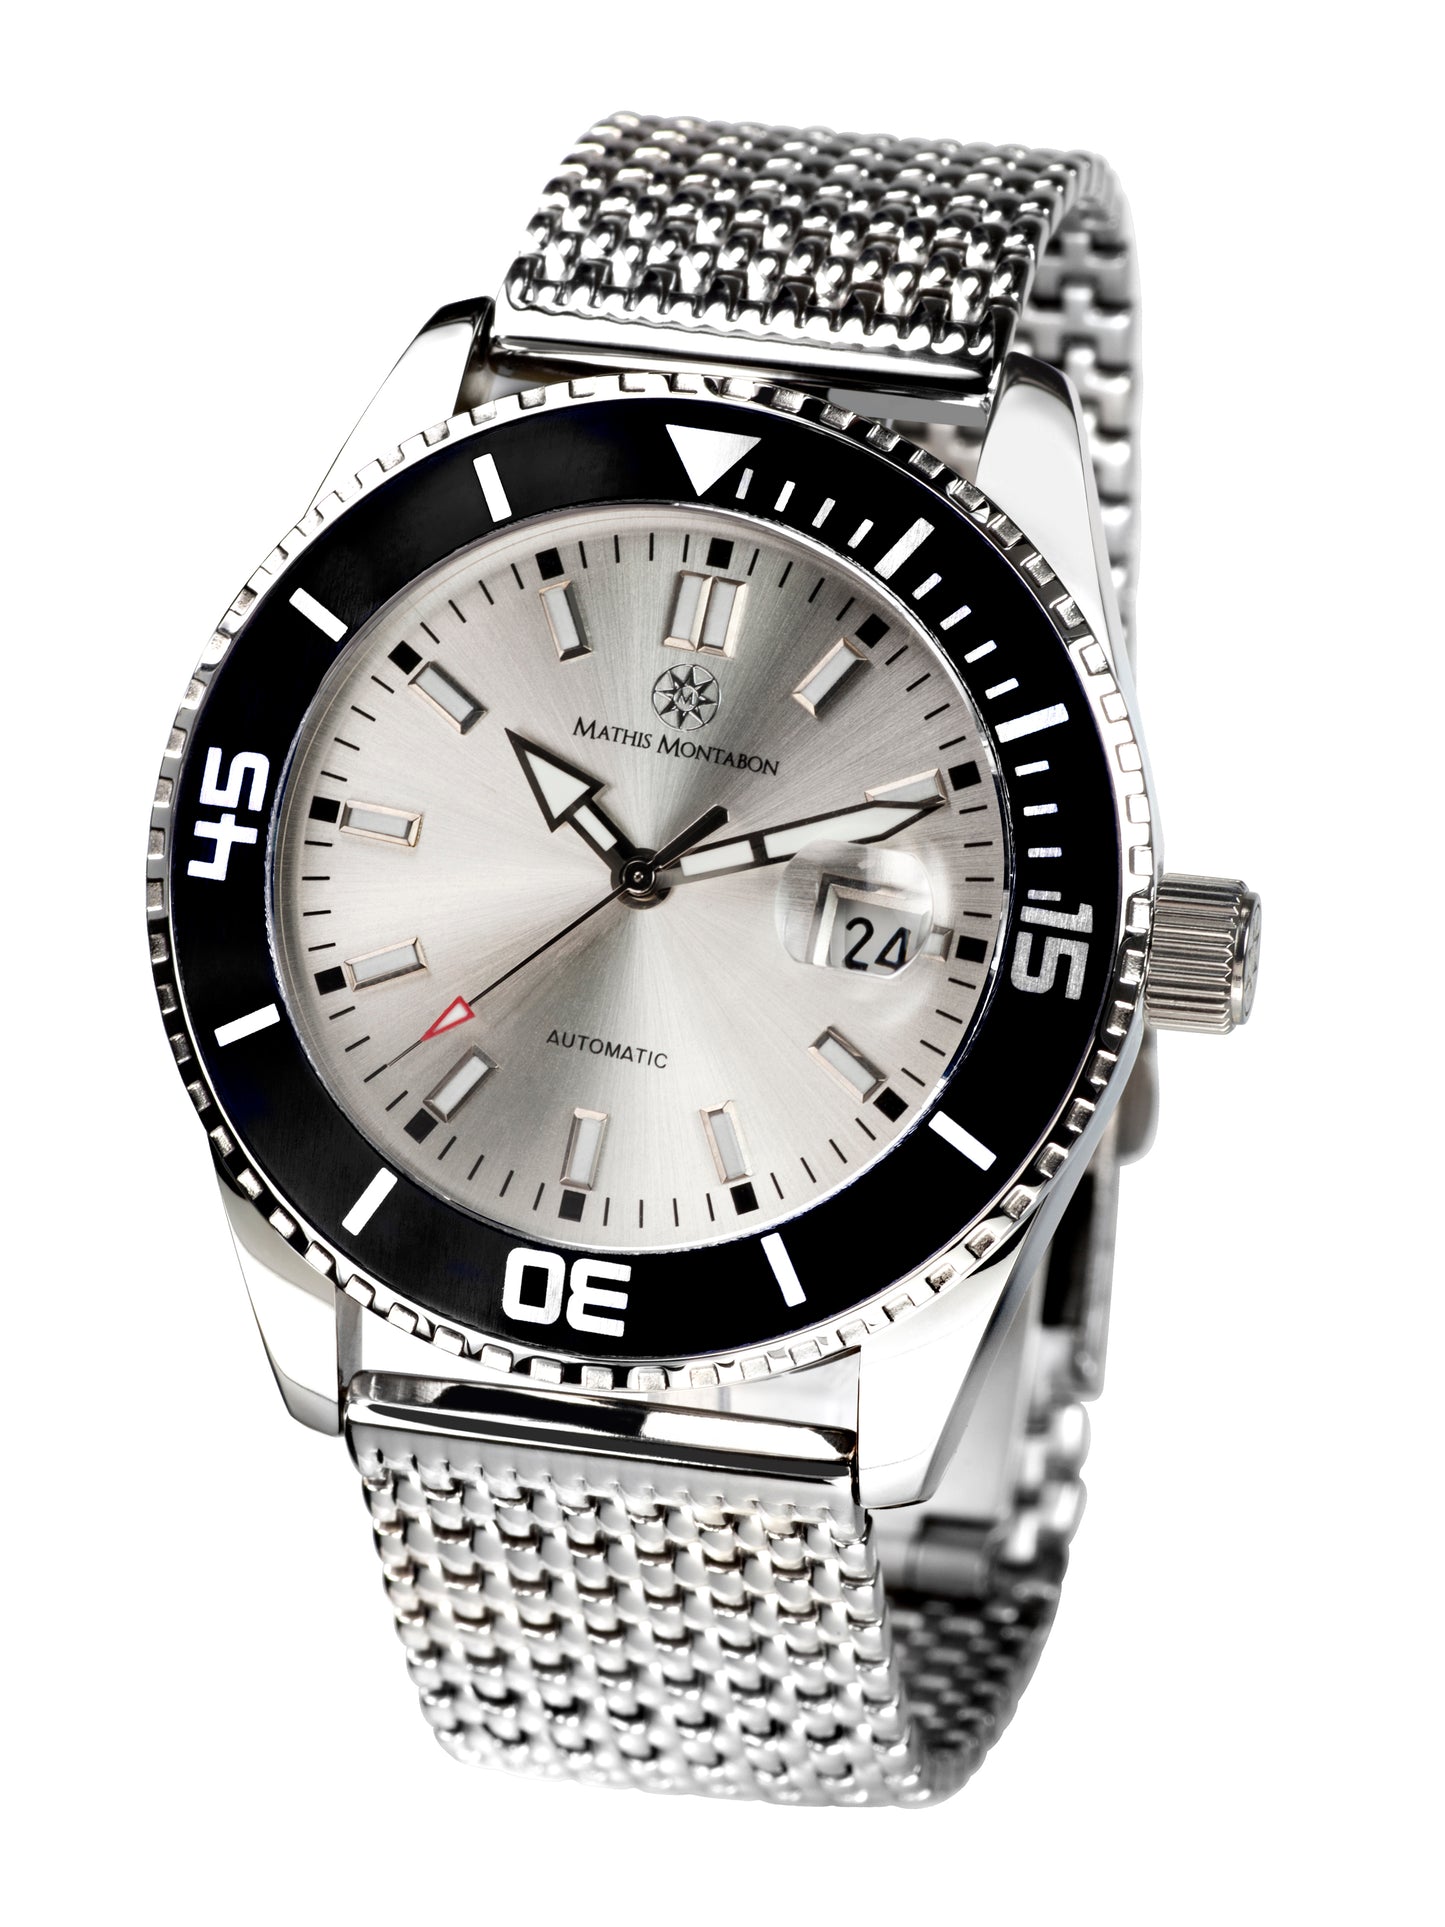 Automatic watches — Super Atlantique — Mathis Montabon — silber